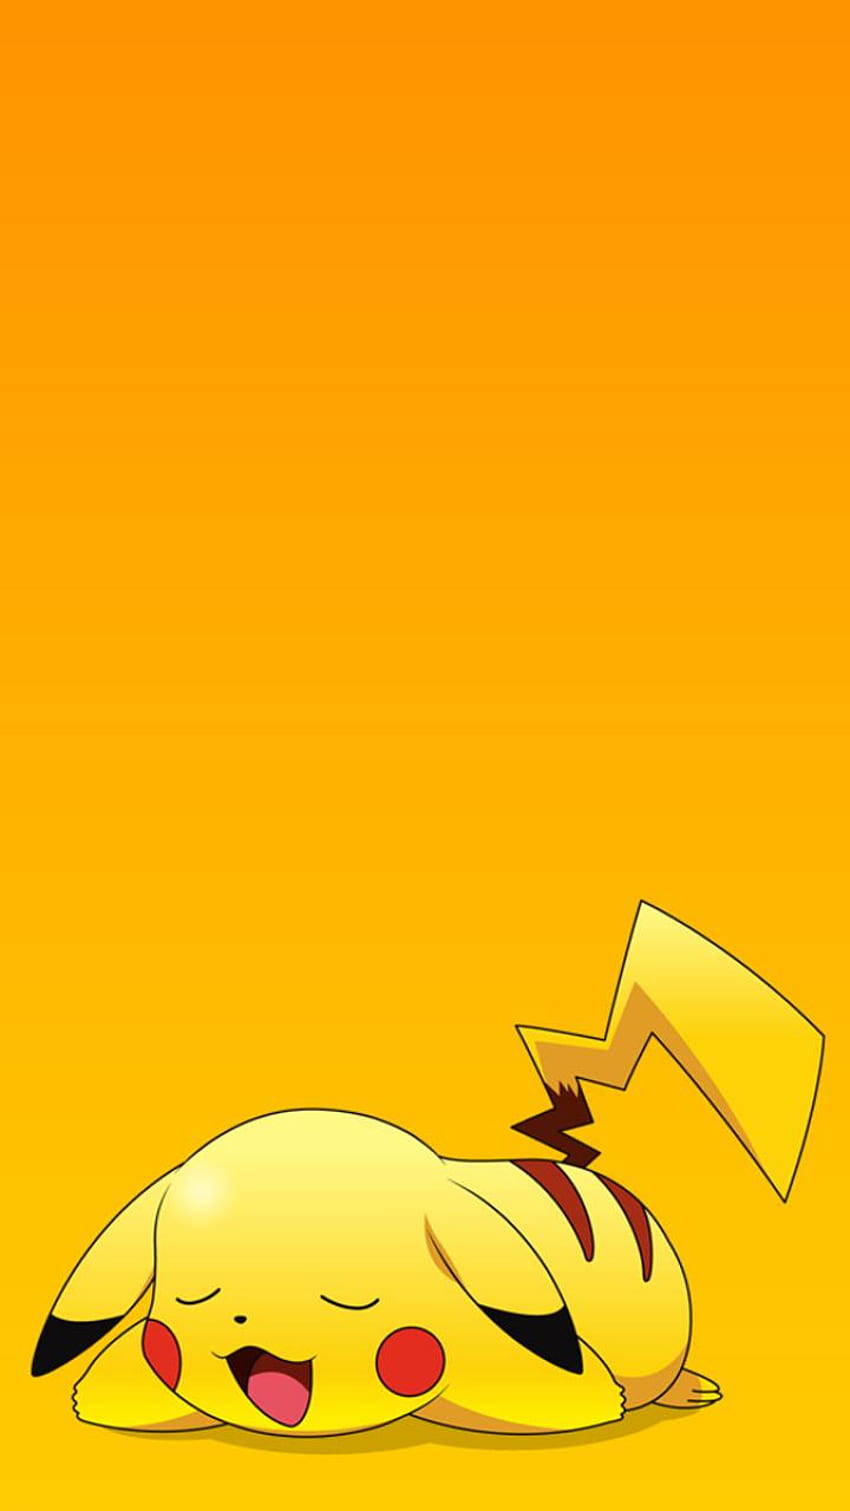 Pikachu Supreme: Cool OLED Phone Wallpaper